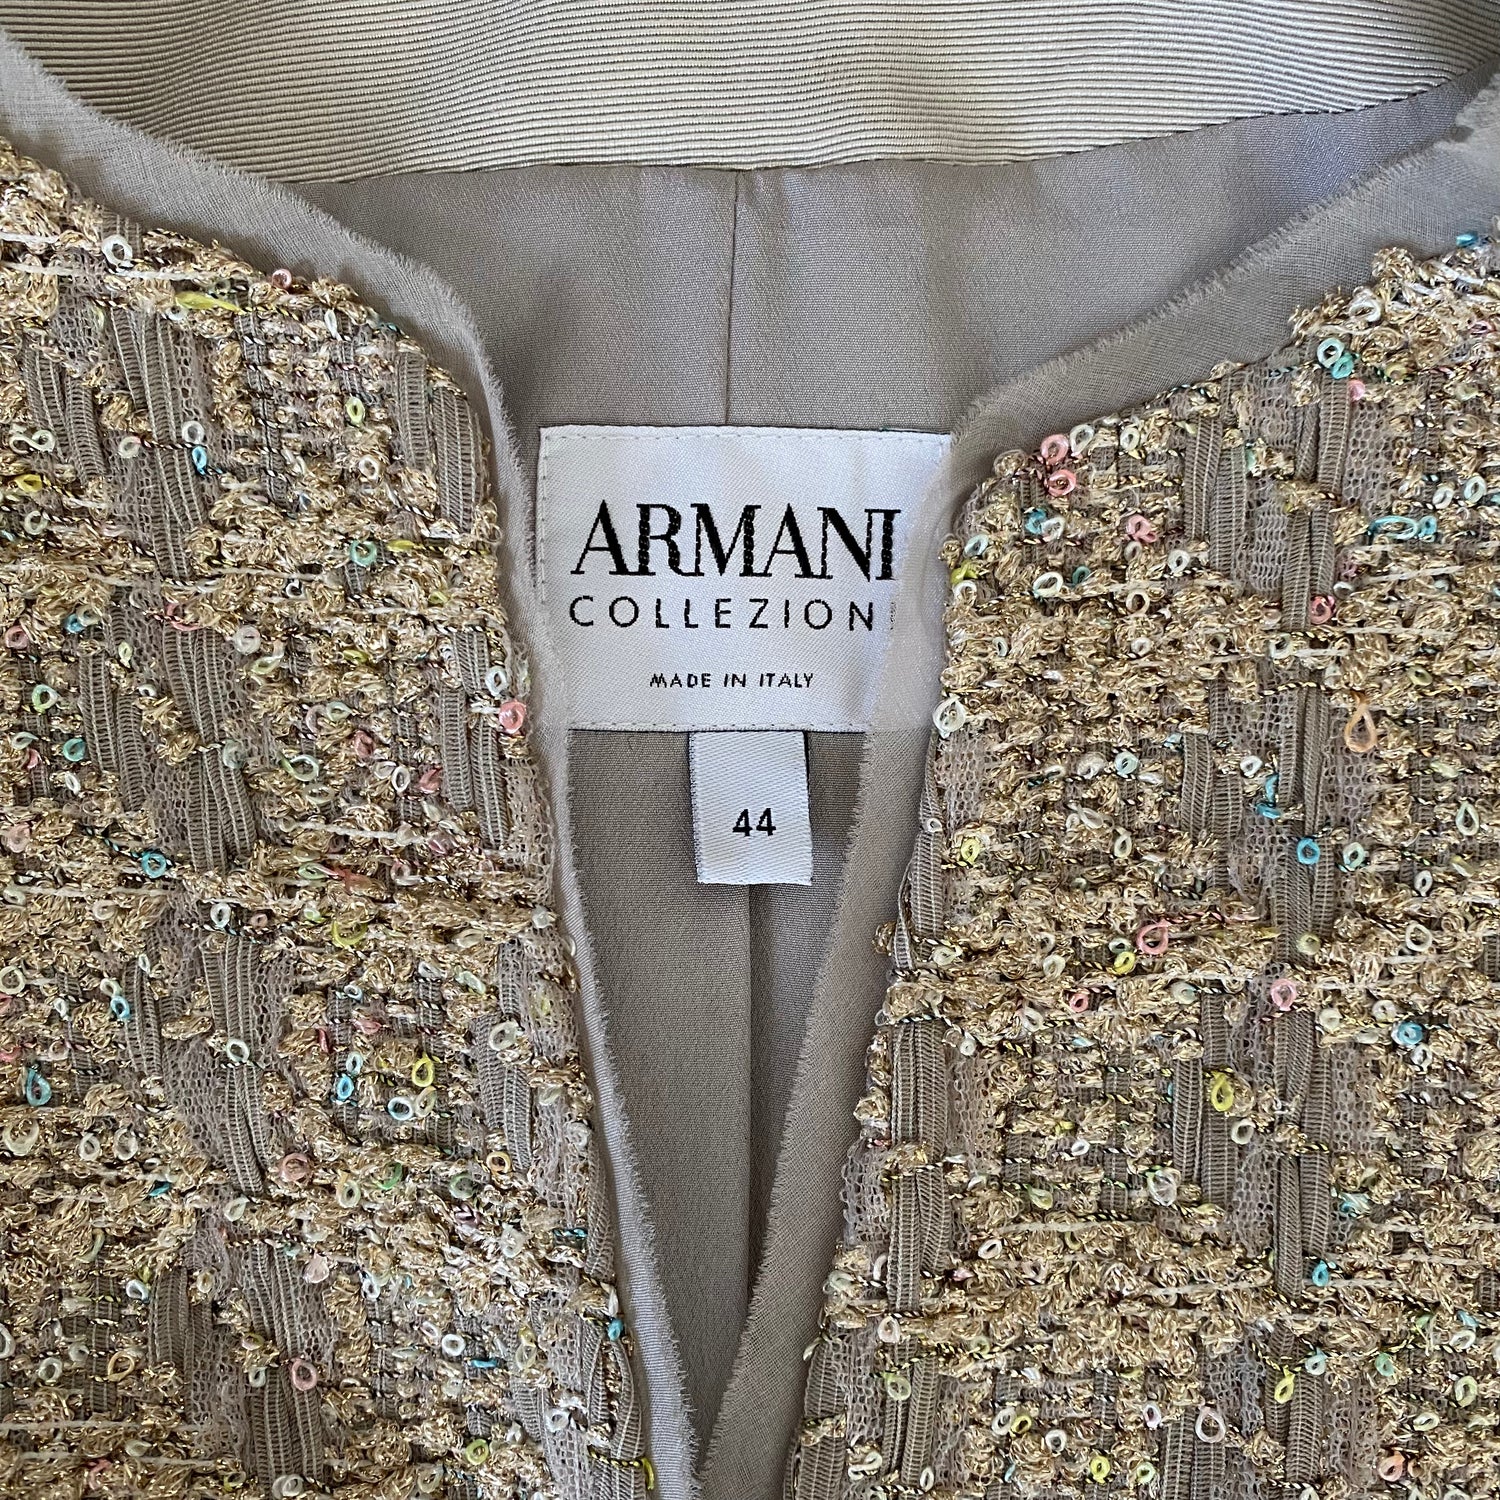 Armani Collezioni tweed jacket - L - 2000s